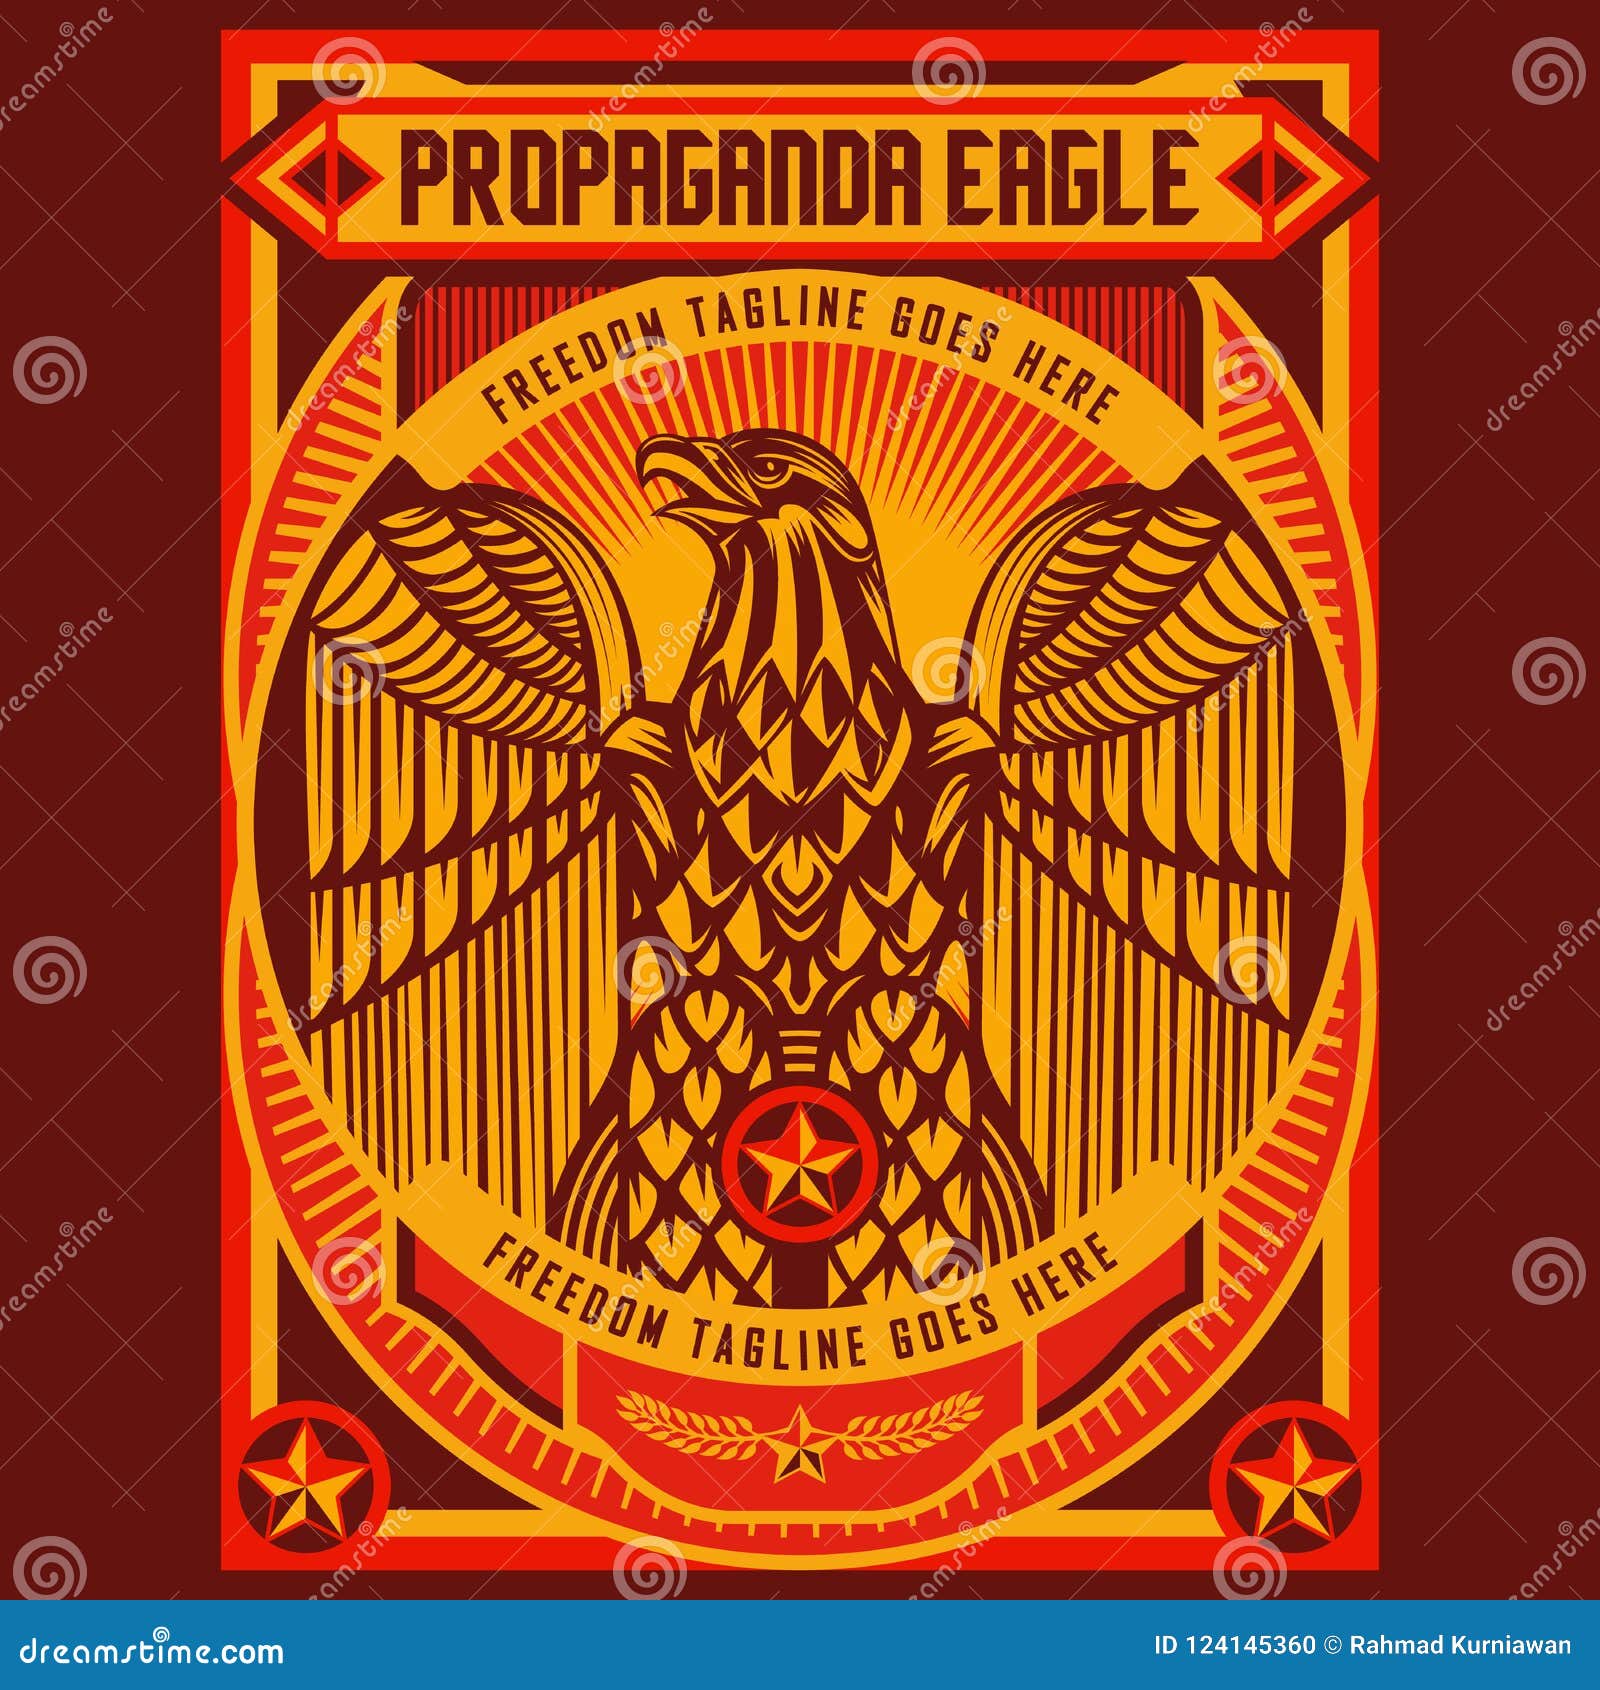 eagle propaganda posters s background set